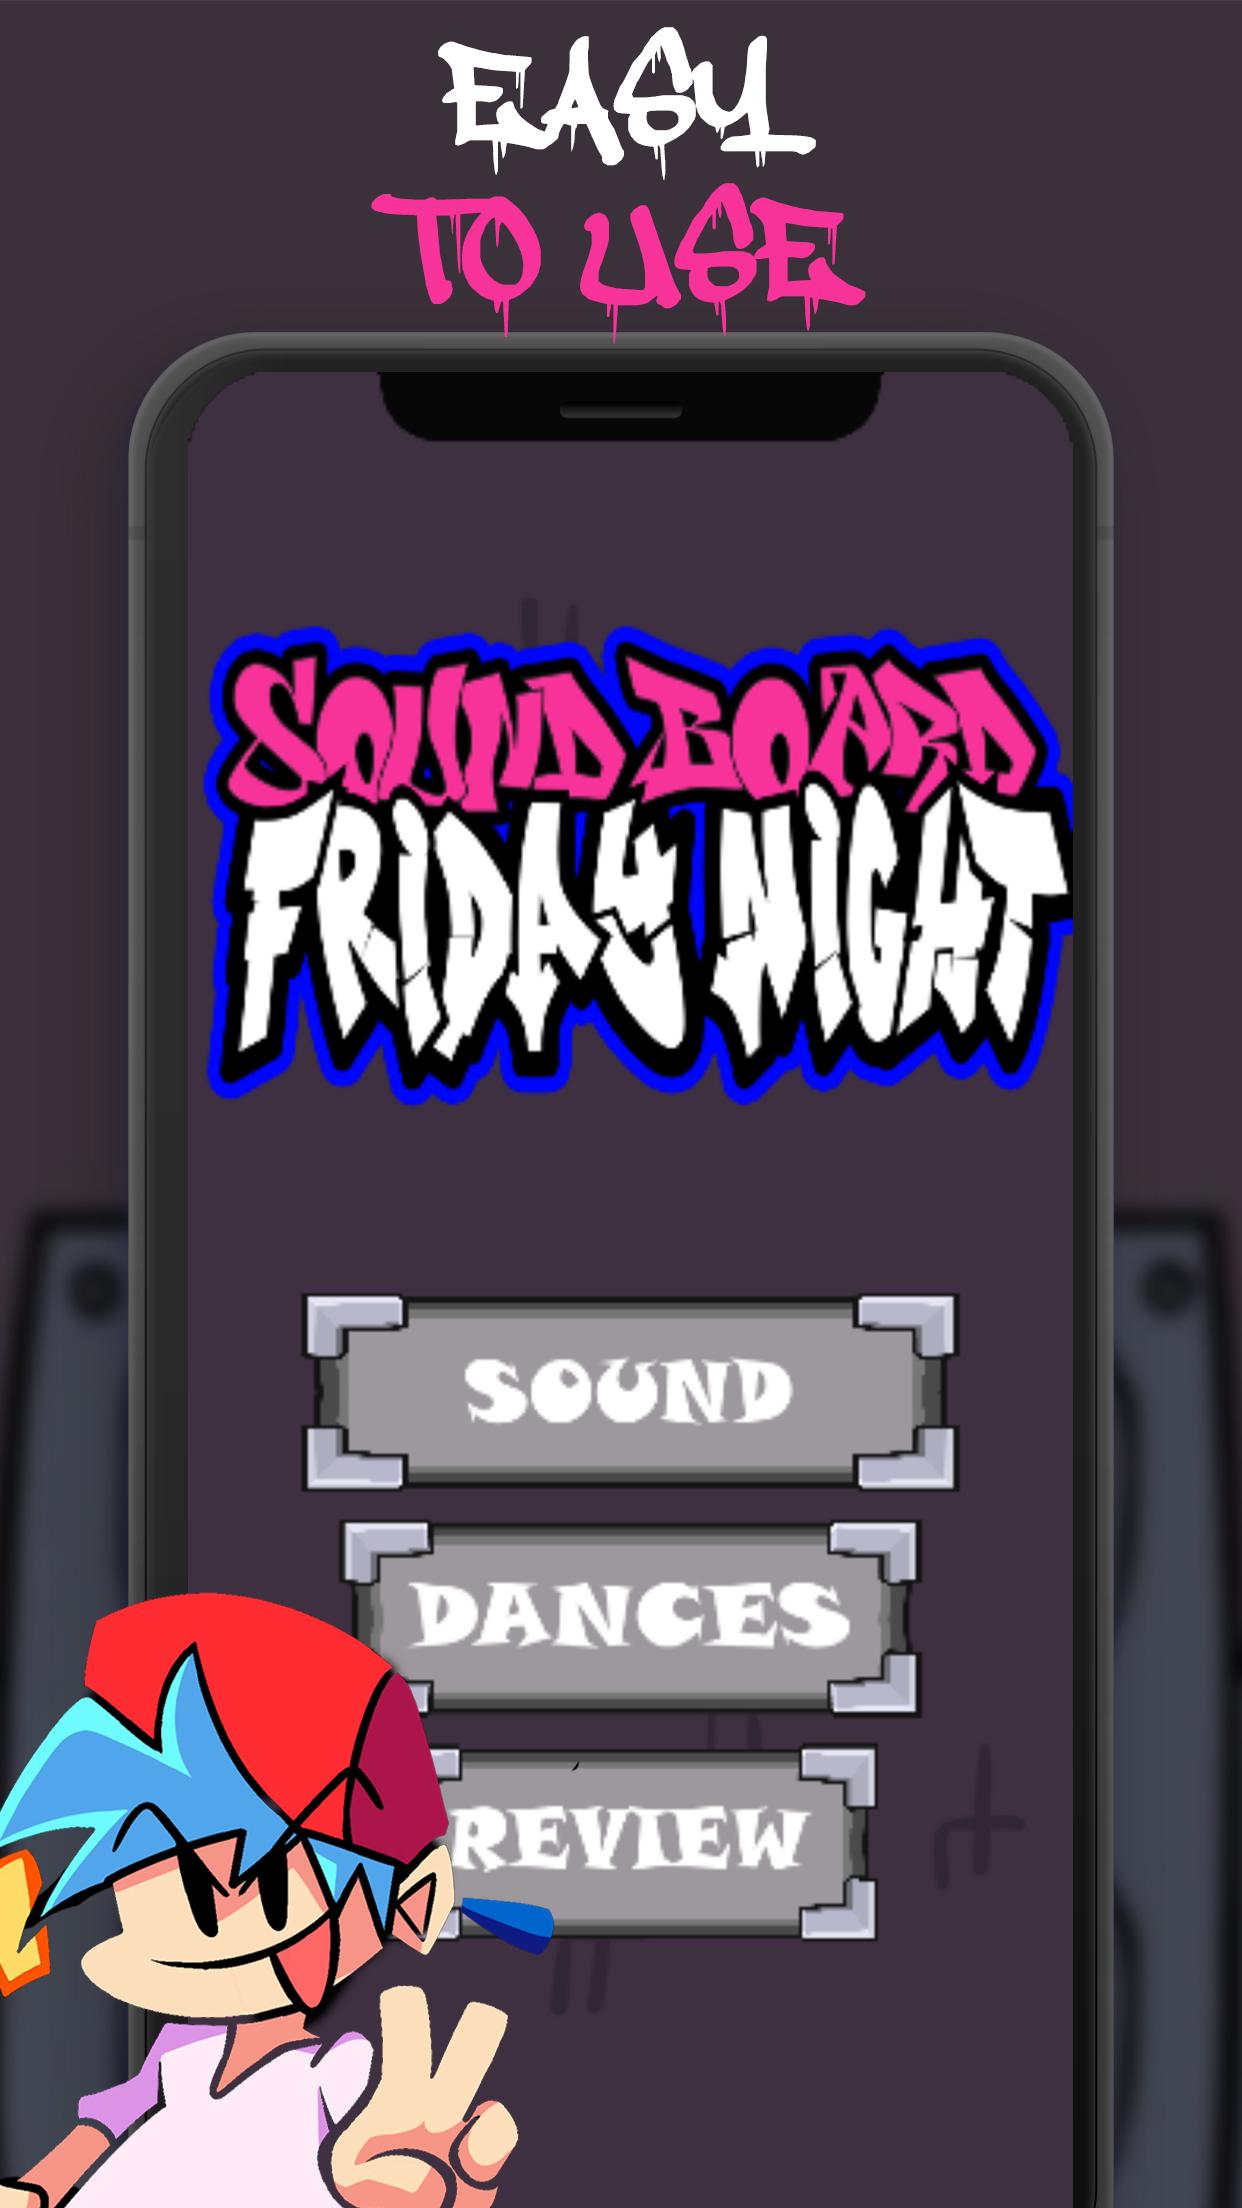 SoundBoard For Friday Night 2.0 Screenshot 1